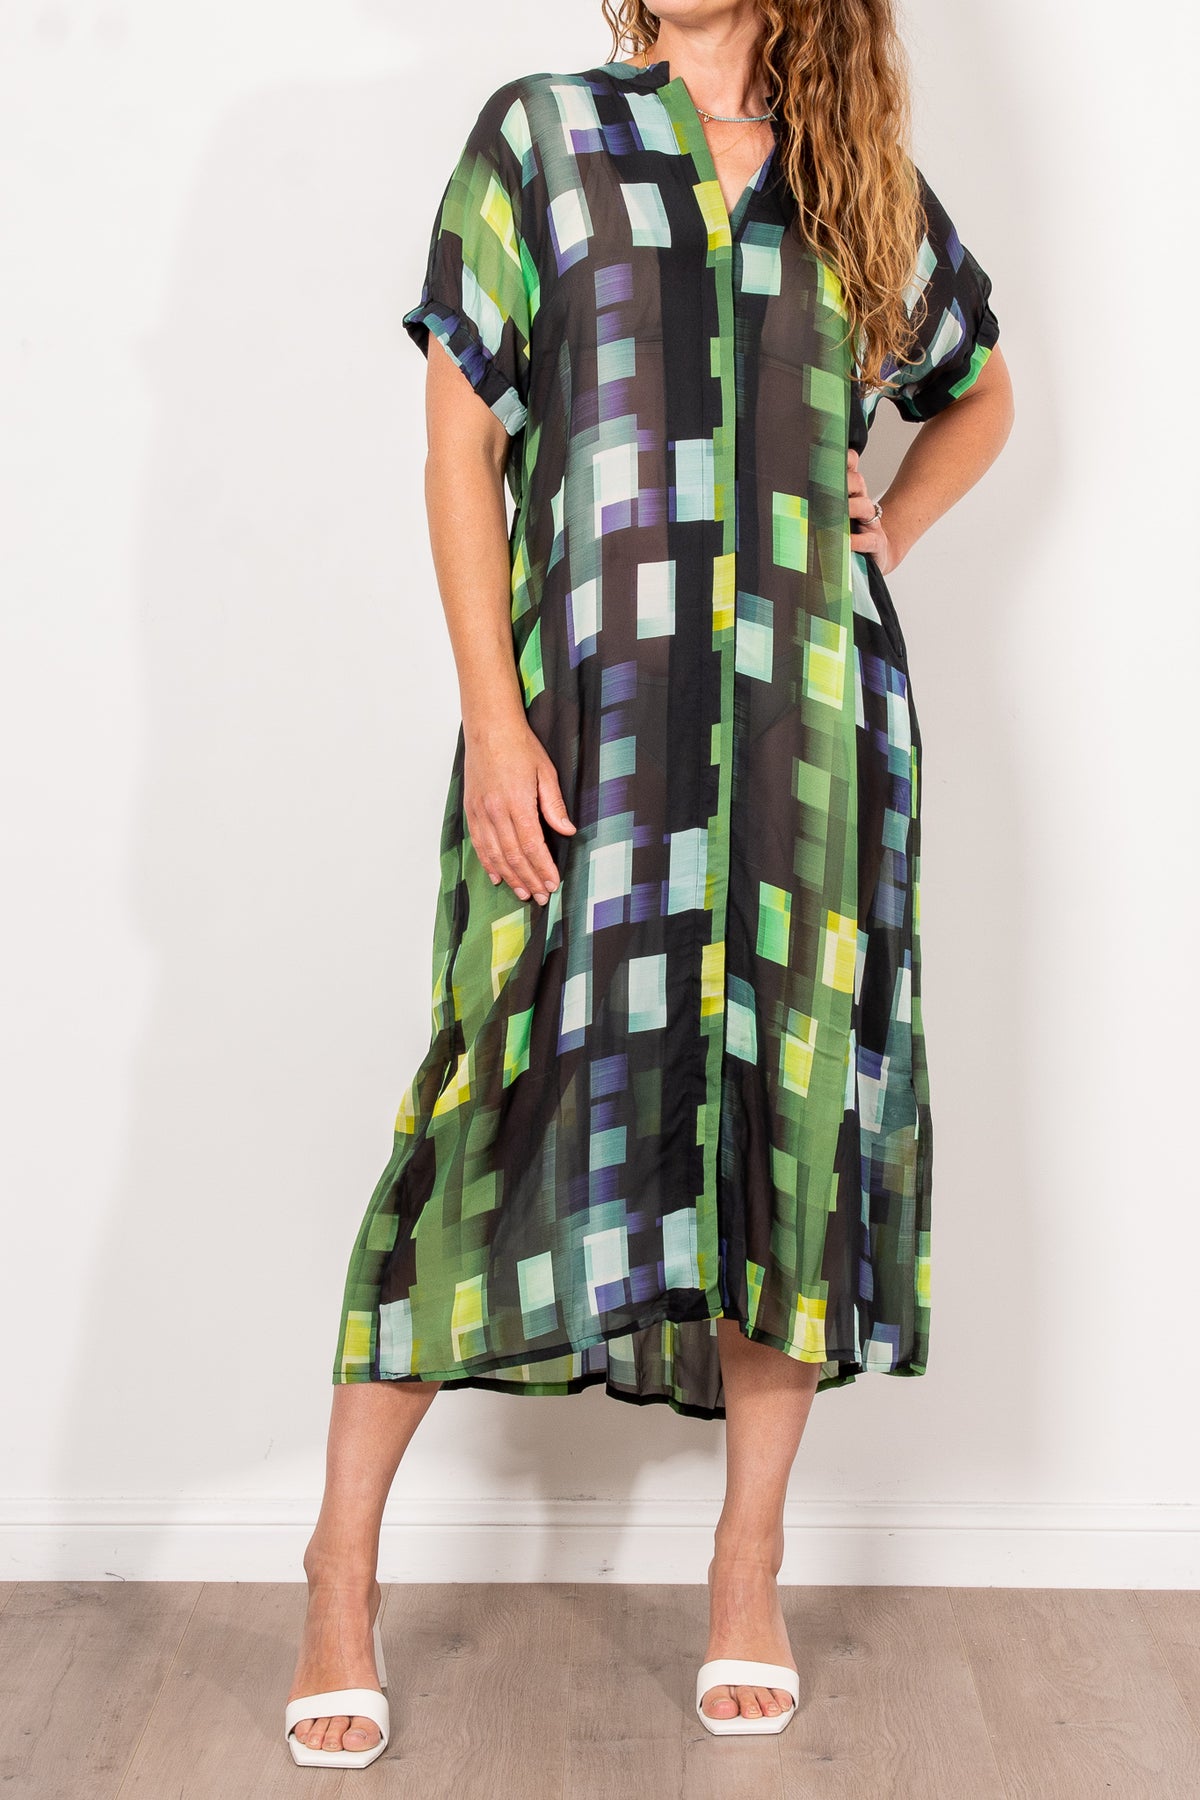 ELK Indi Sheer Dress Shutter Grid